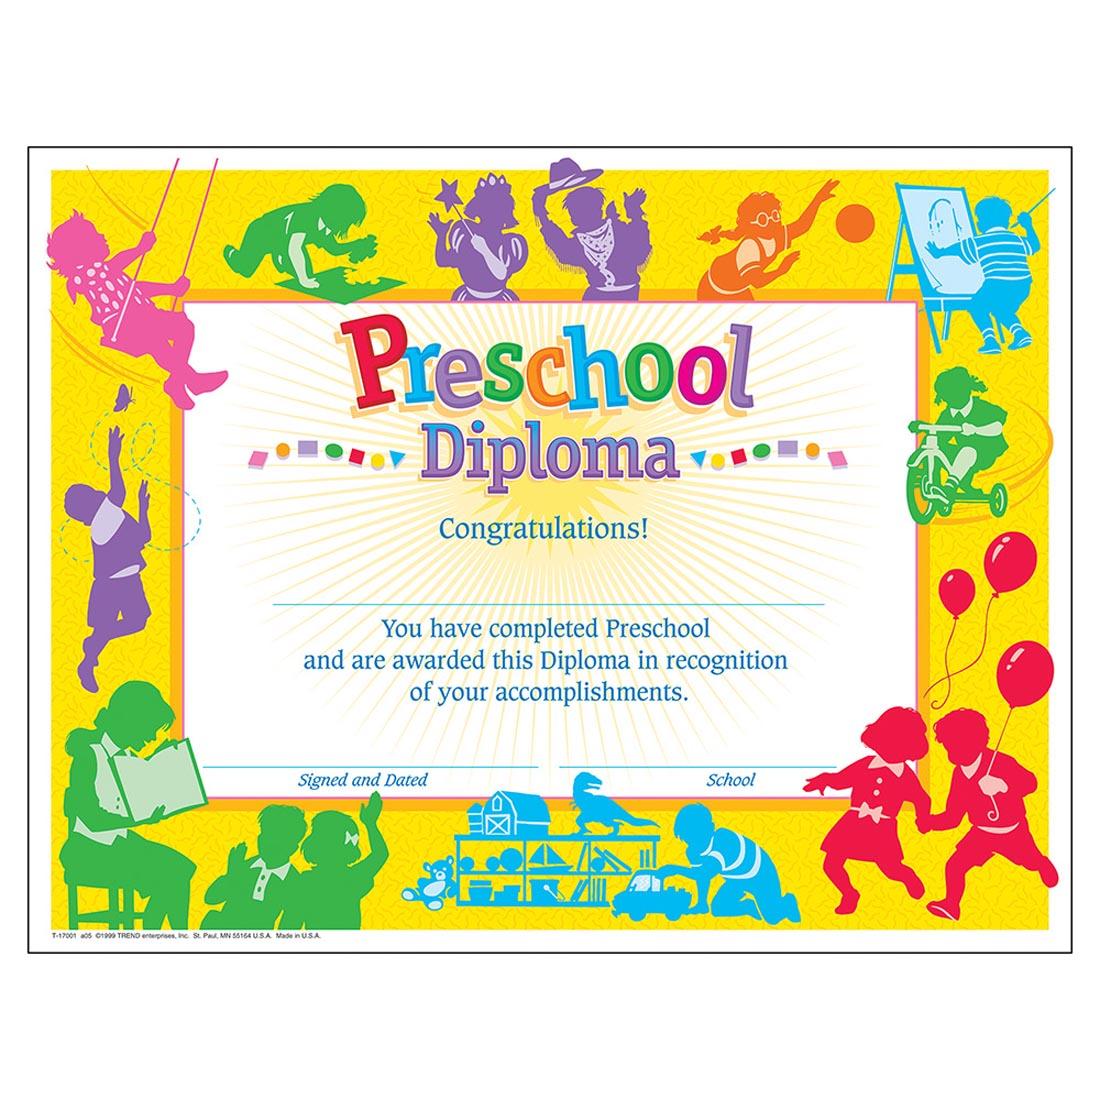 TREND Preschool Classic Diploma Certificate